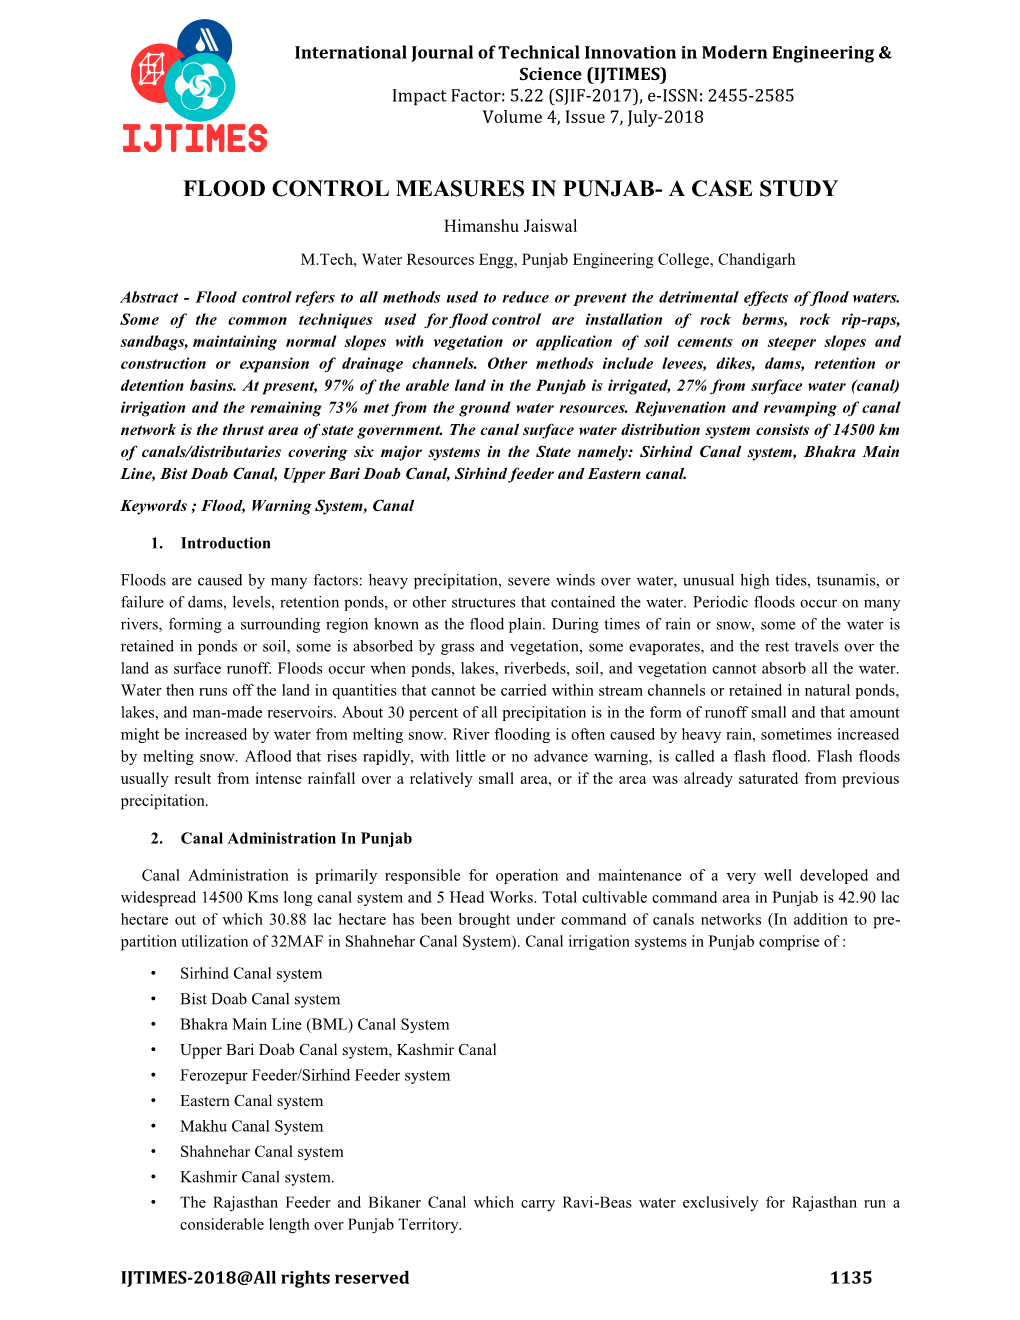 FLOOD CONTROL MEASURES in PUNJAB- a CASE STUDY Himanshu Jaiswal M.Tech, Water Resources Engg, Punjab Engineering College, Chandigarh